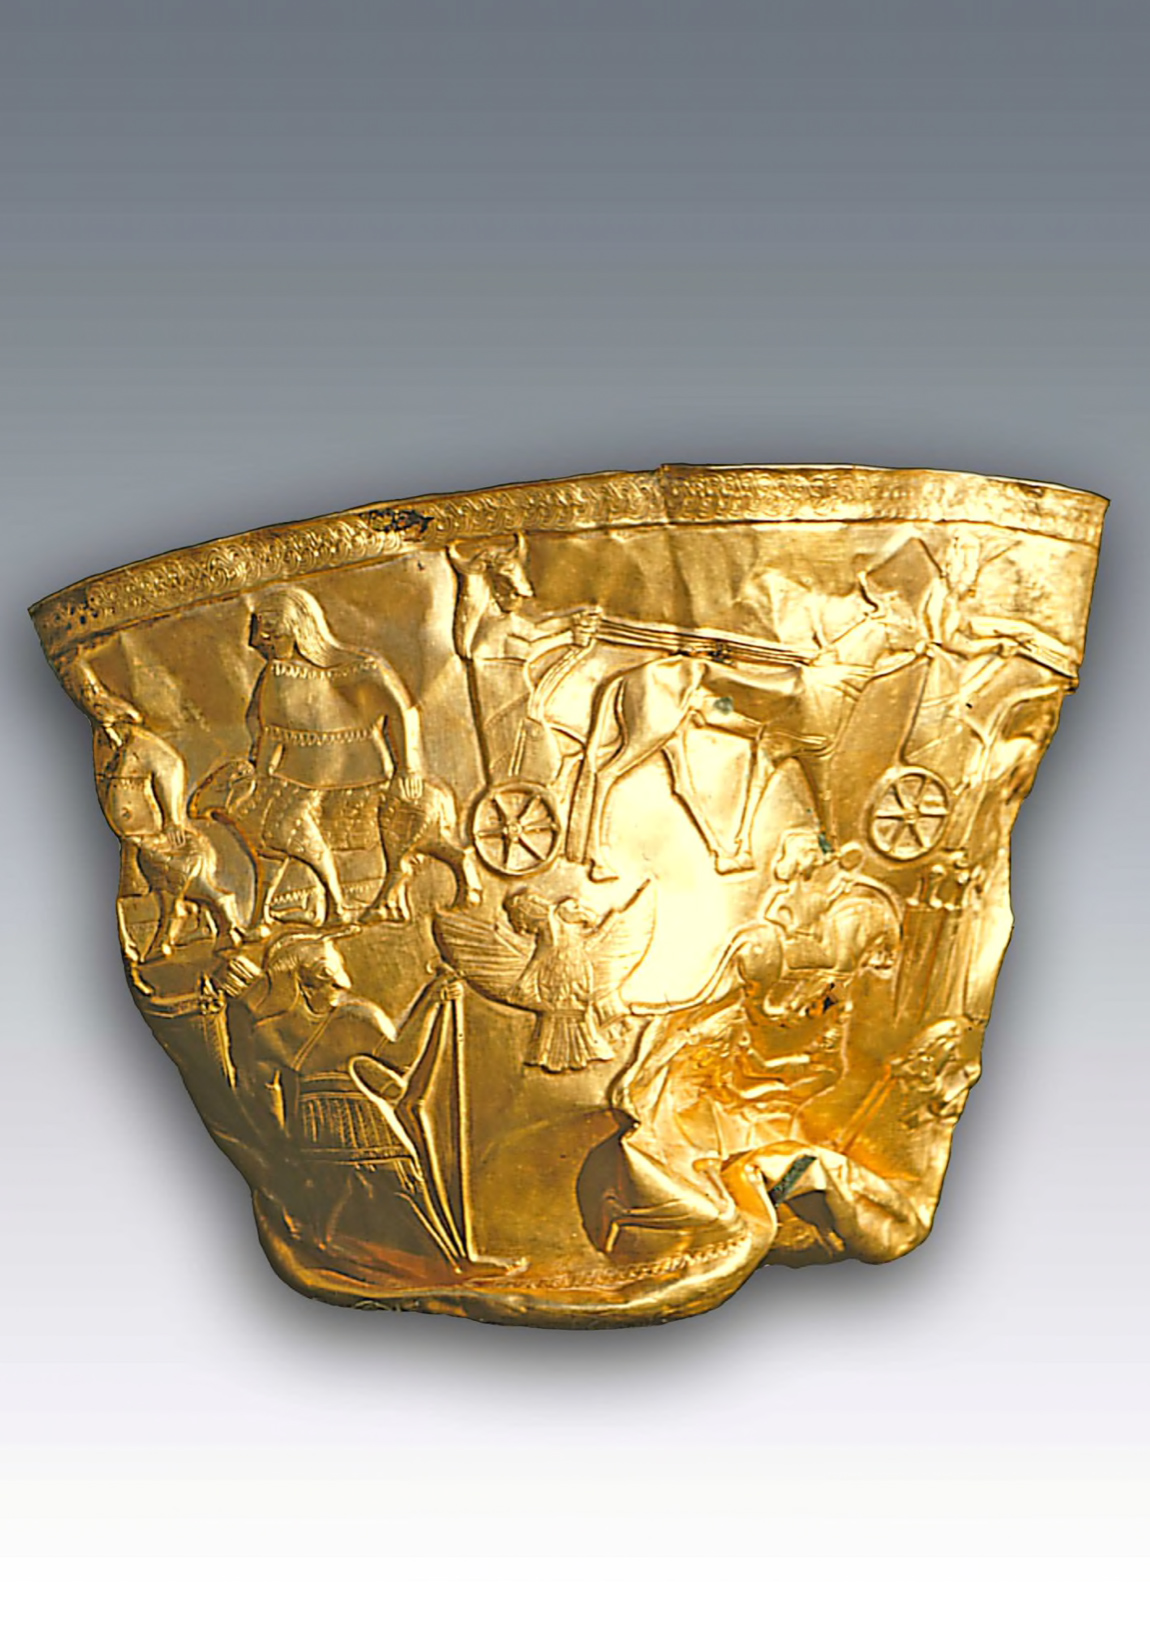 The Hasanlu Gold Bowl